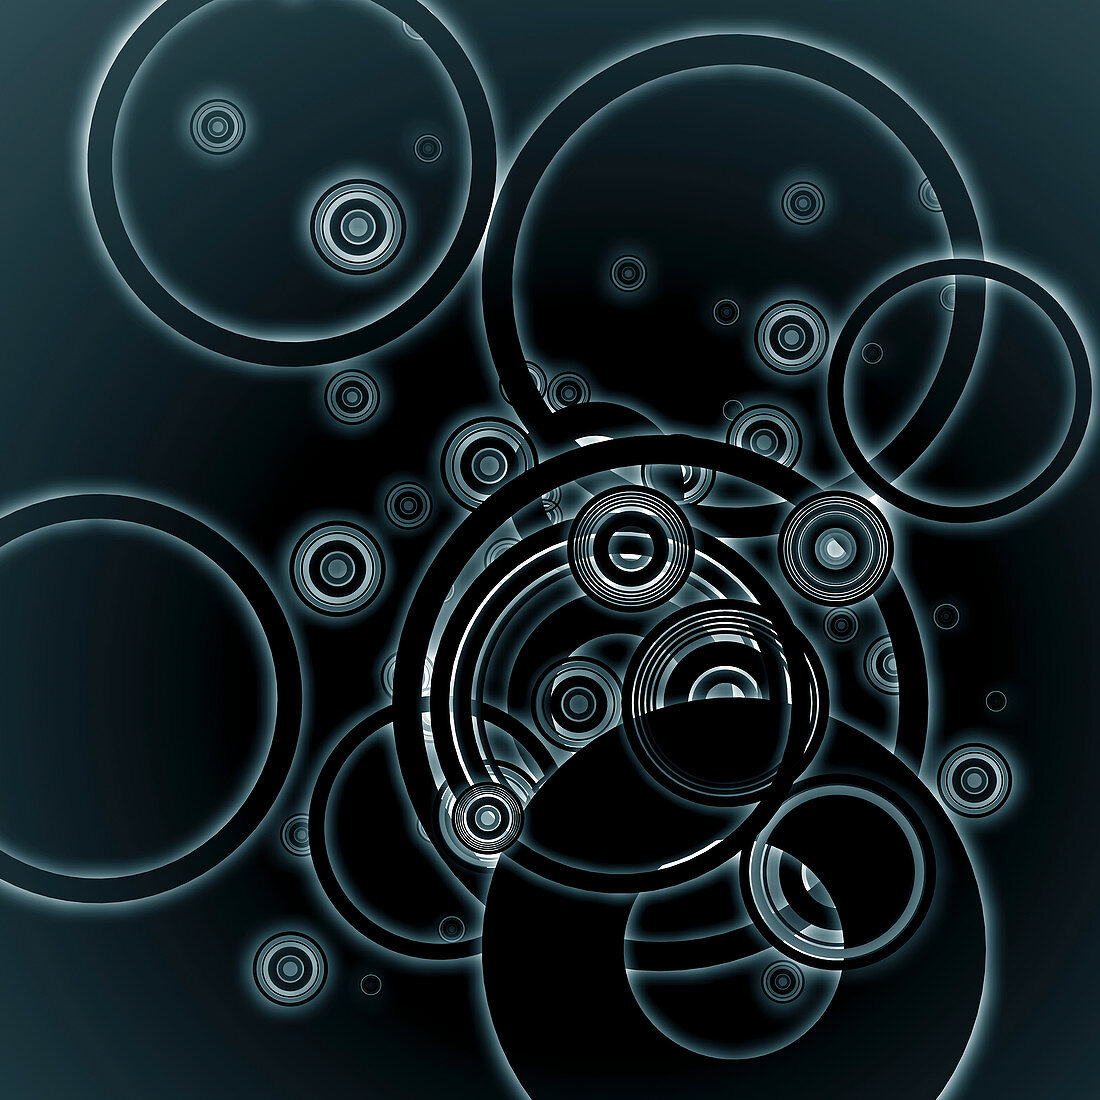 Negative image of concentric circle pattern, illustration